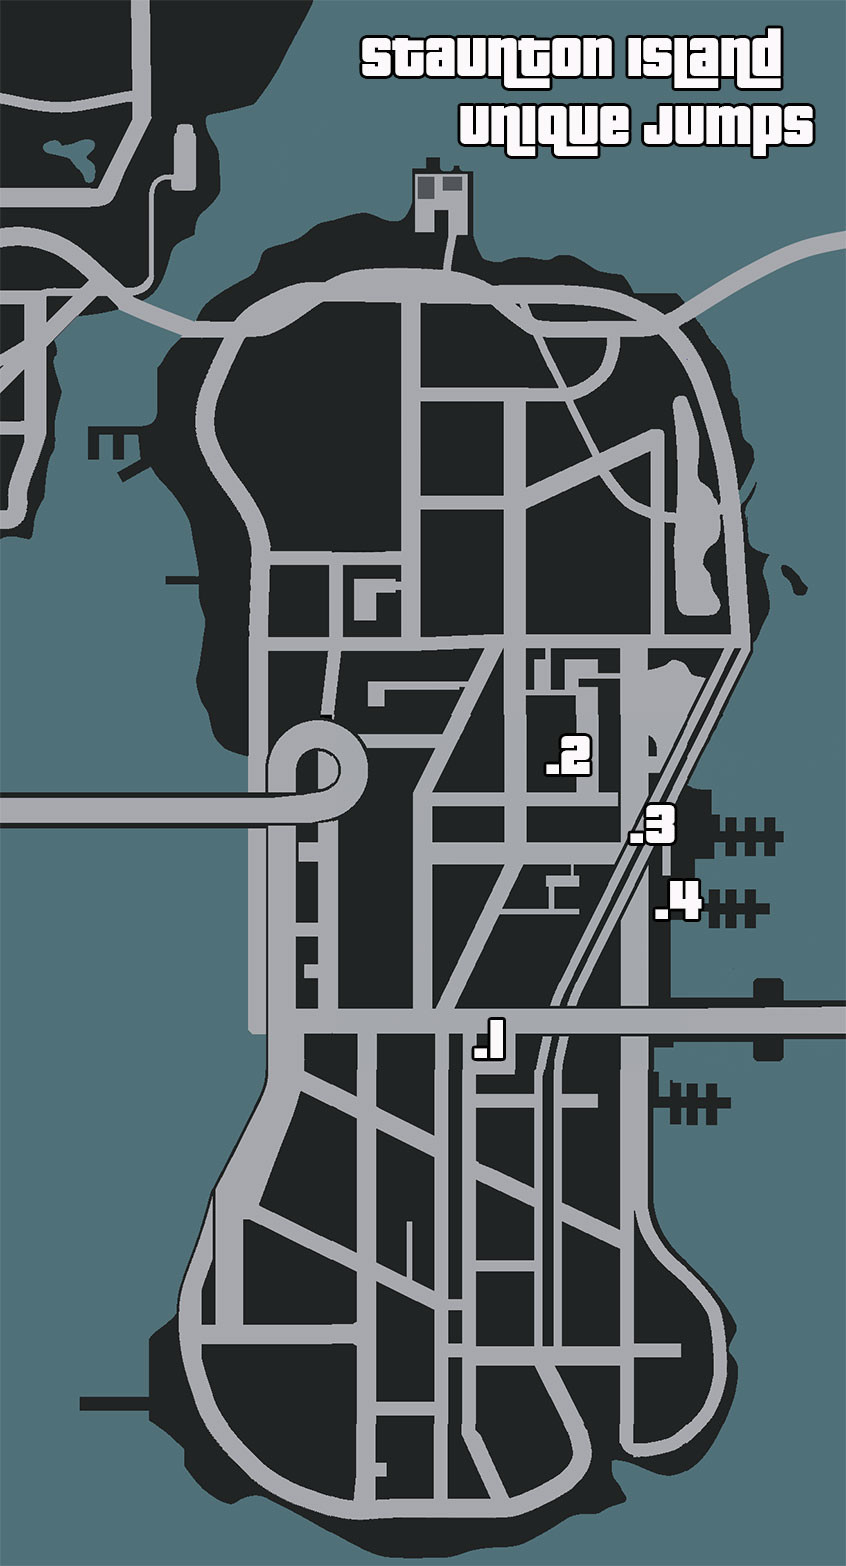 All Unique Jumps Locations in GTA 3